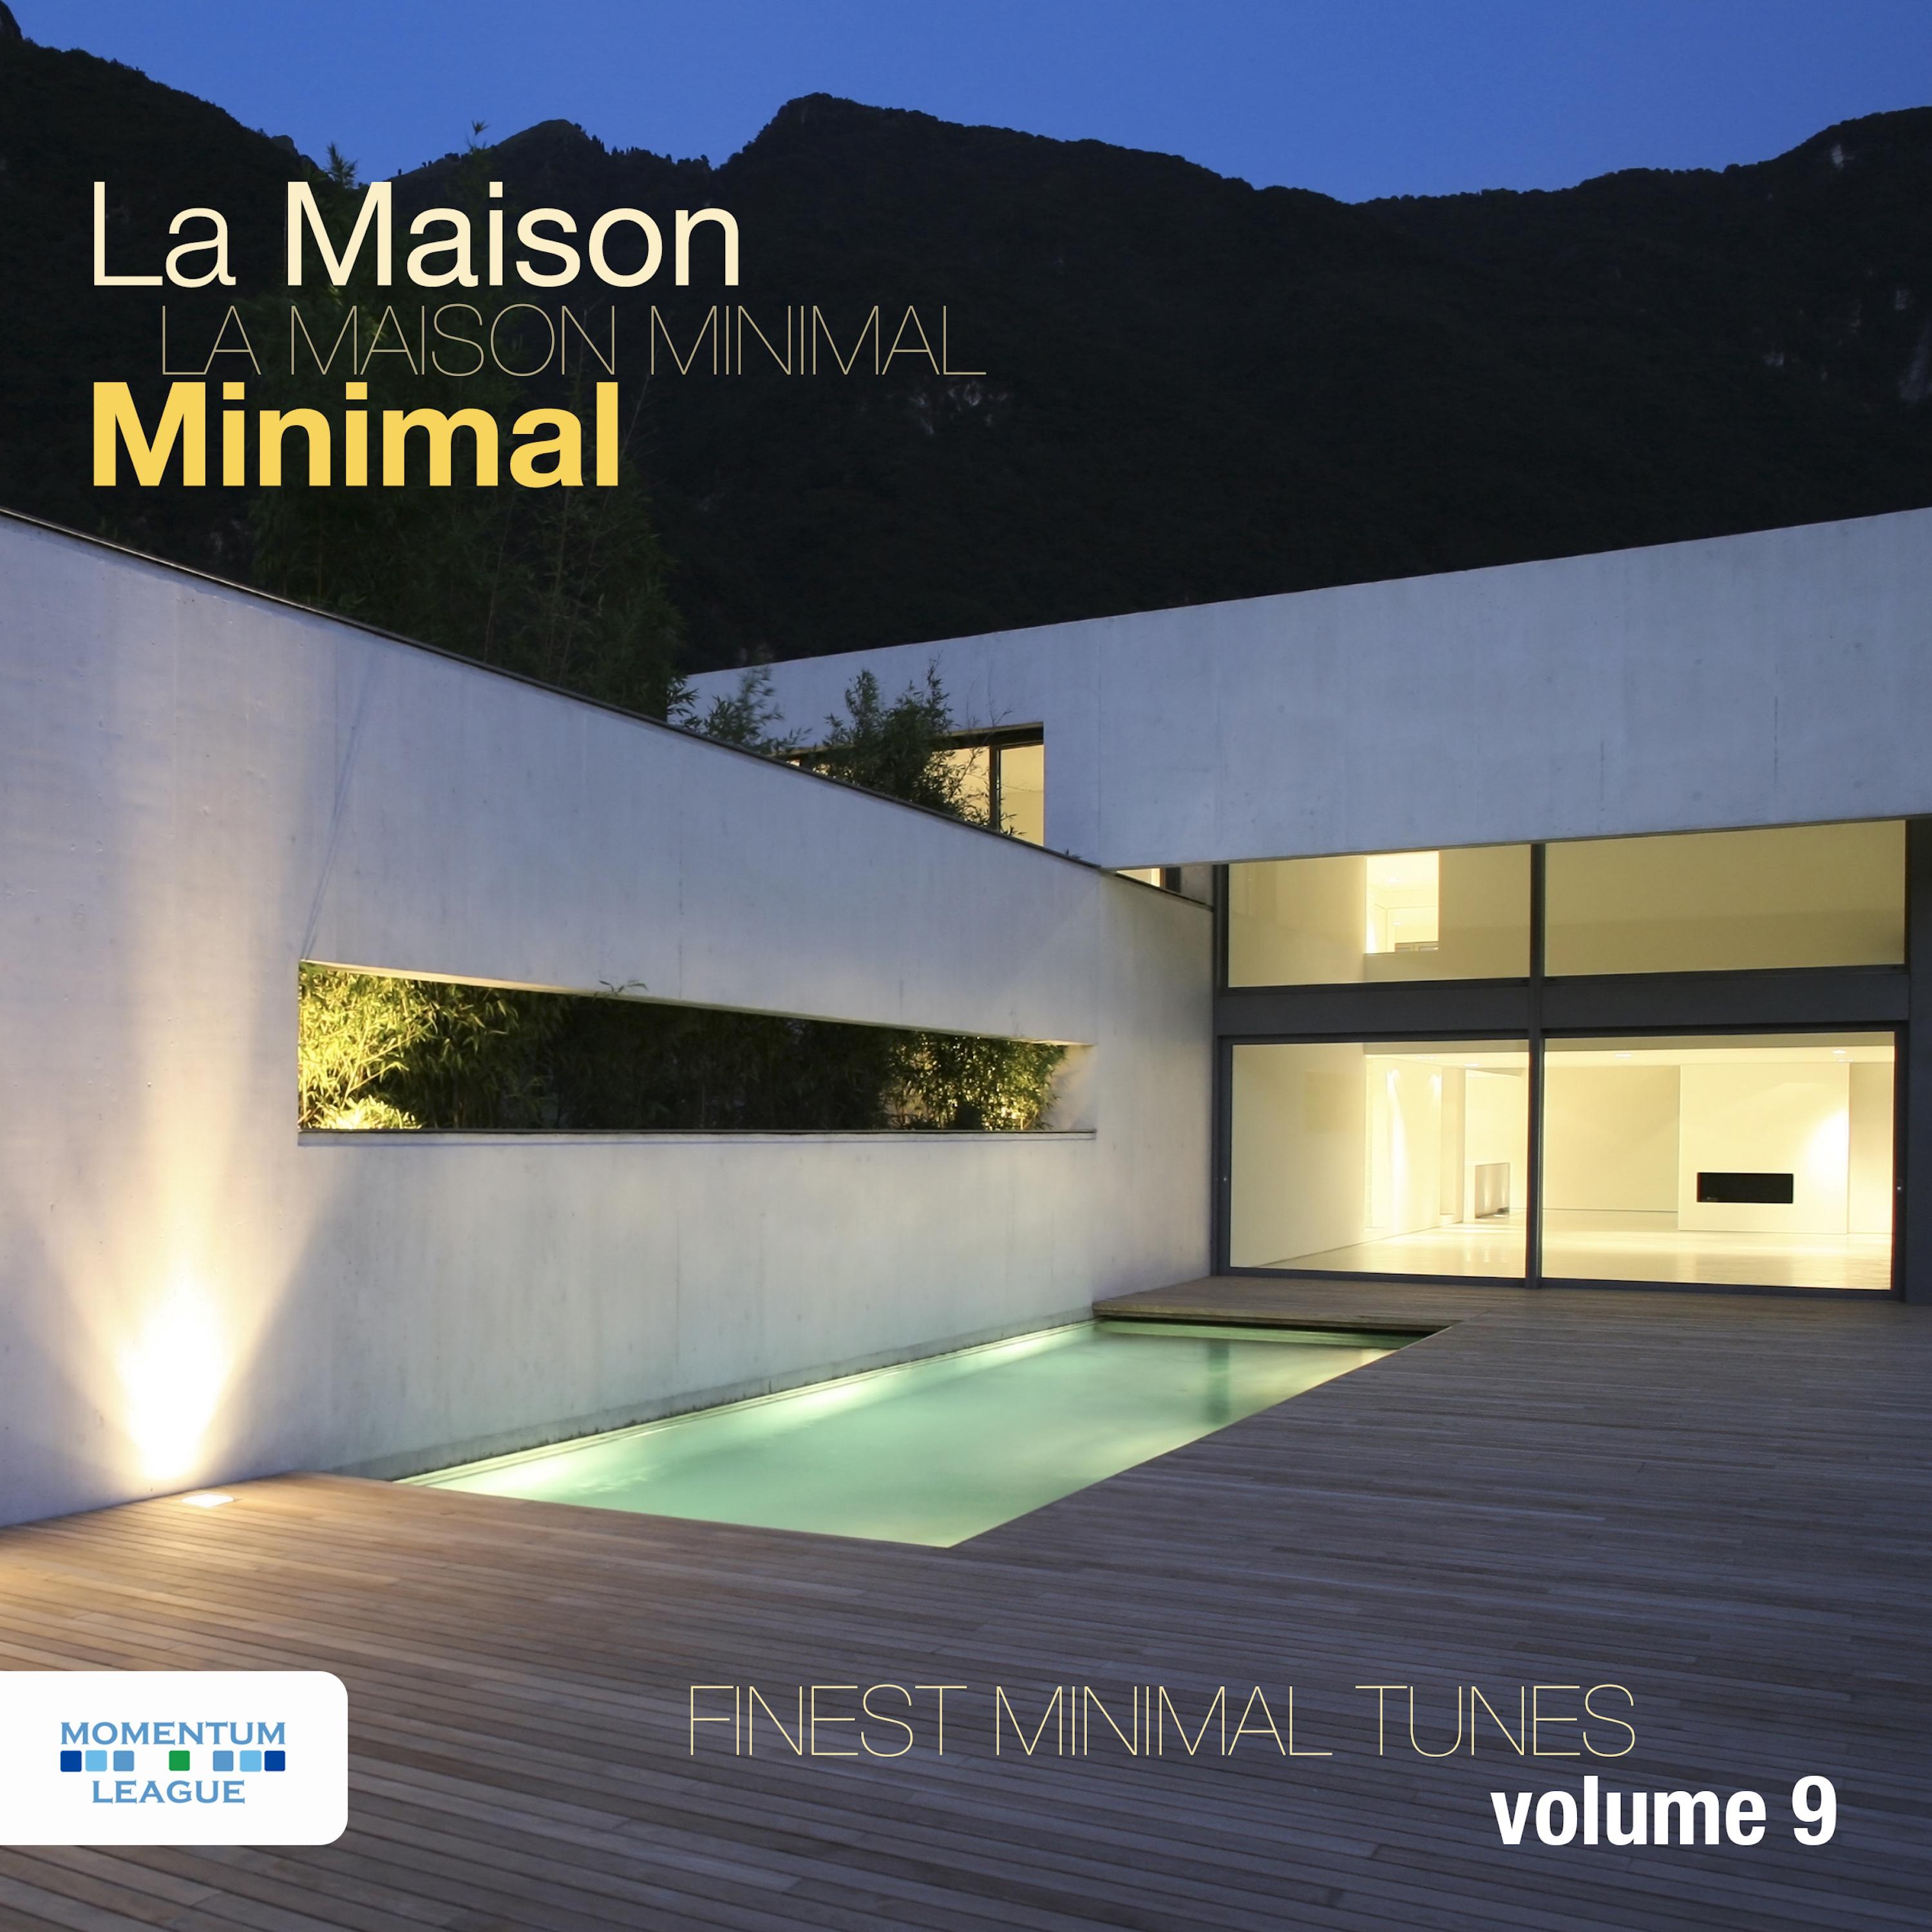 La Maison Minimal, Vol. 9 - Finest Minimal Tunes